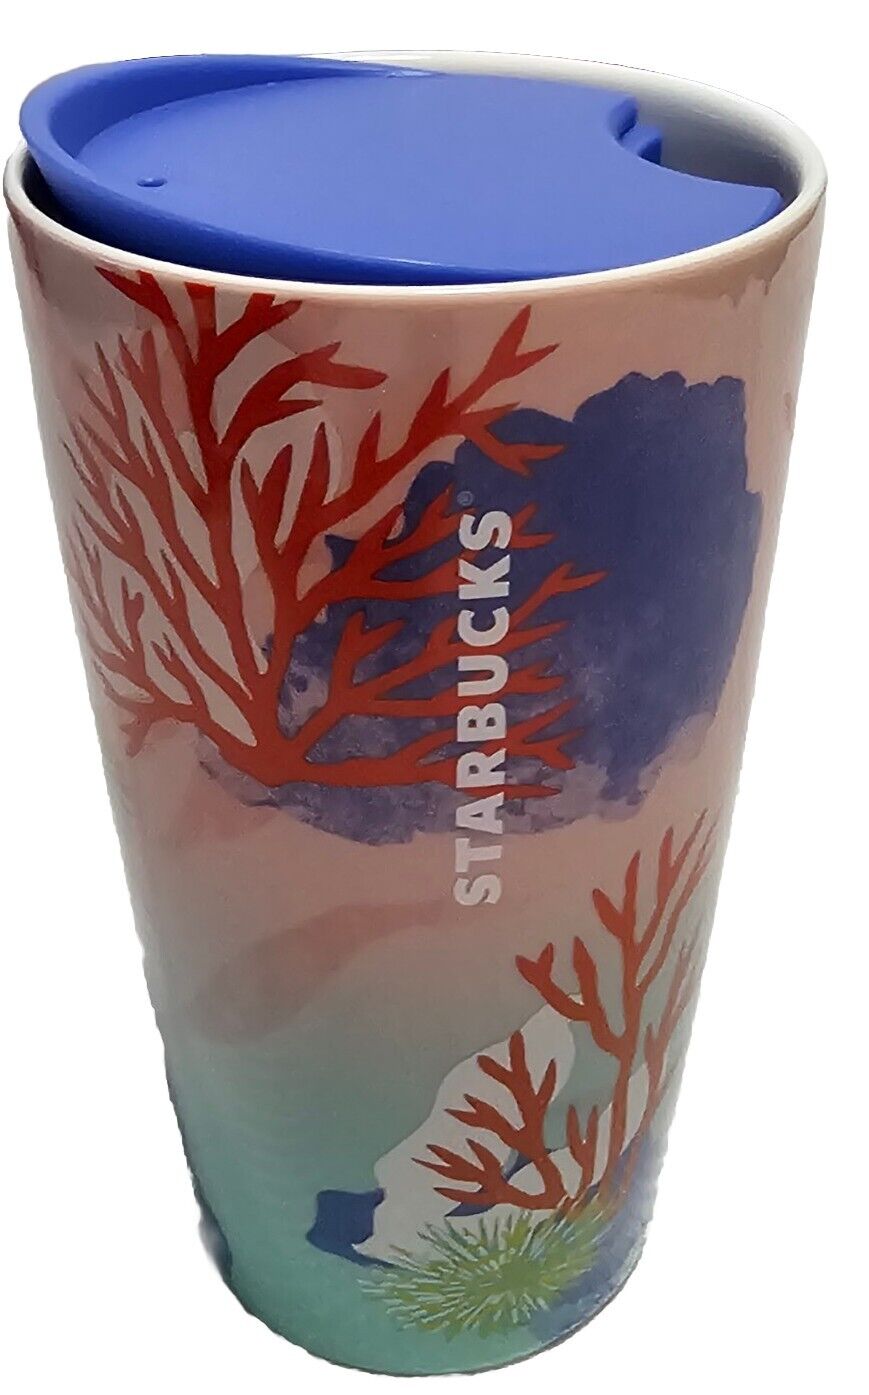 NEW, Starbucks 2021 Hawaii Collection Coral Reef Ocean Sea 12 oz Ceramic Tumbler